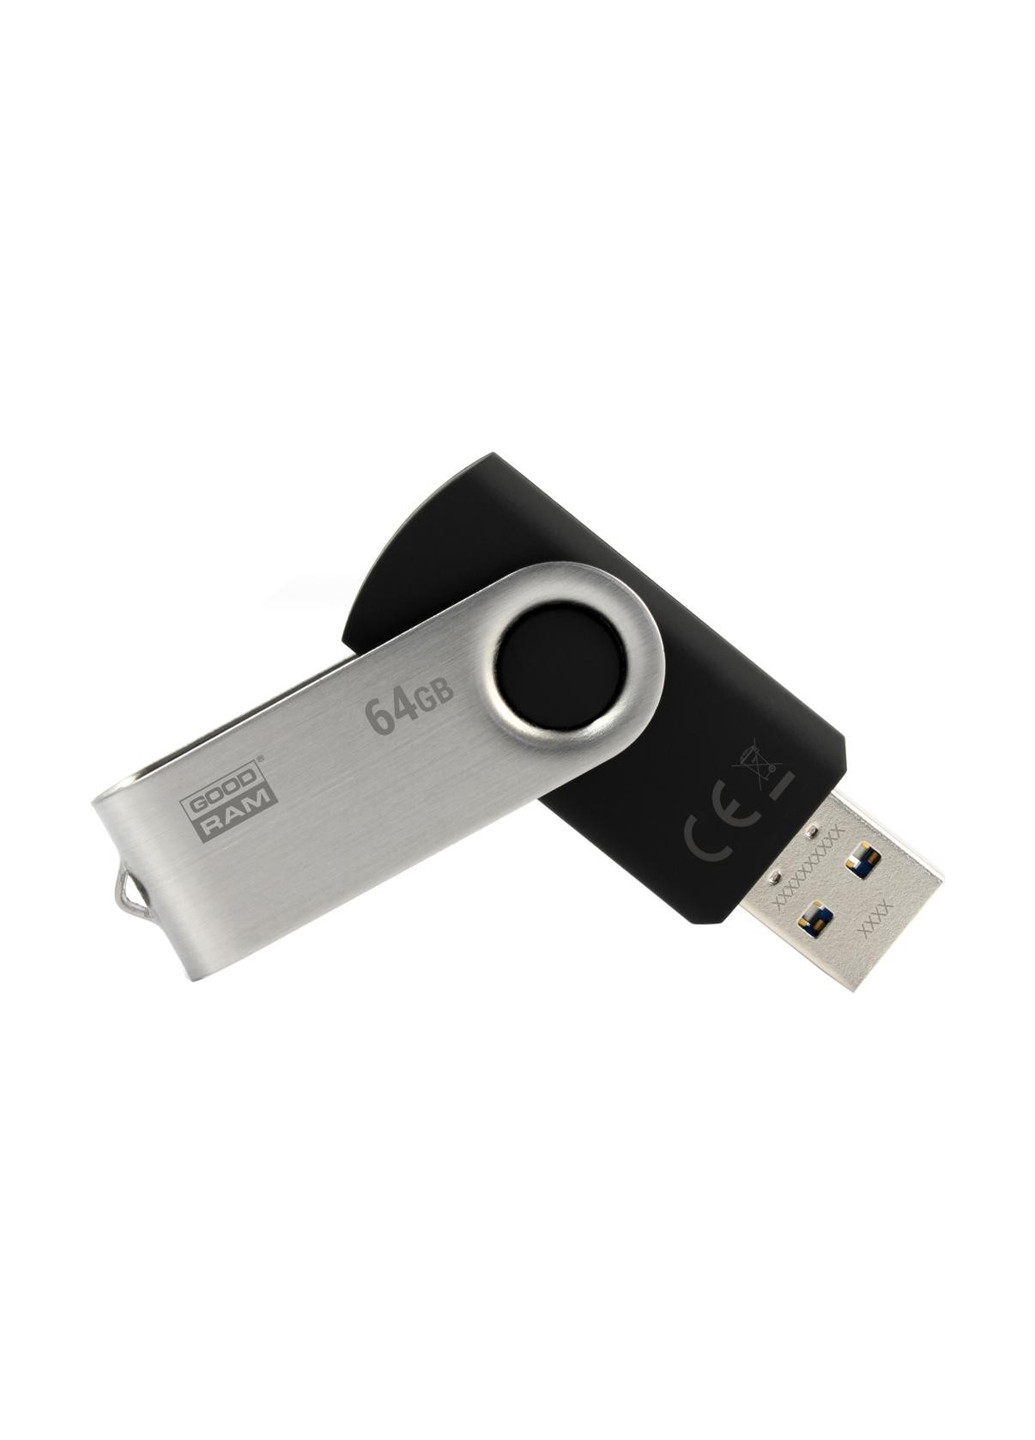 Флеш память USB 64GB UTS2 USB 2.0 Twister Black (UTS2-0640K0R11) Goodram флеш память usb goodram 64gb uts2 usb 2.0 twister black (uts2-0640k0r11) (136742732)